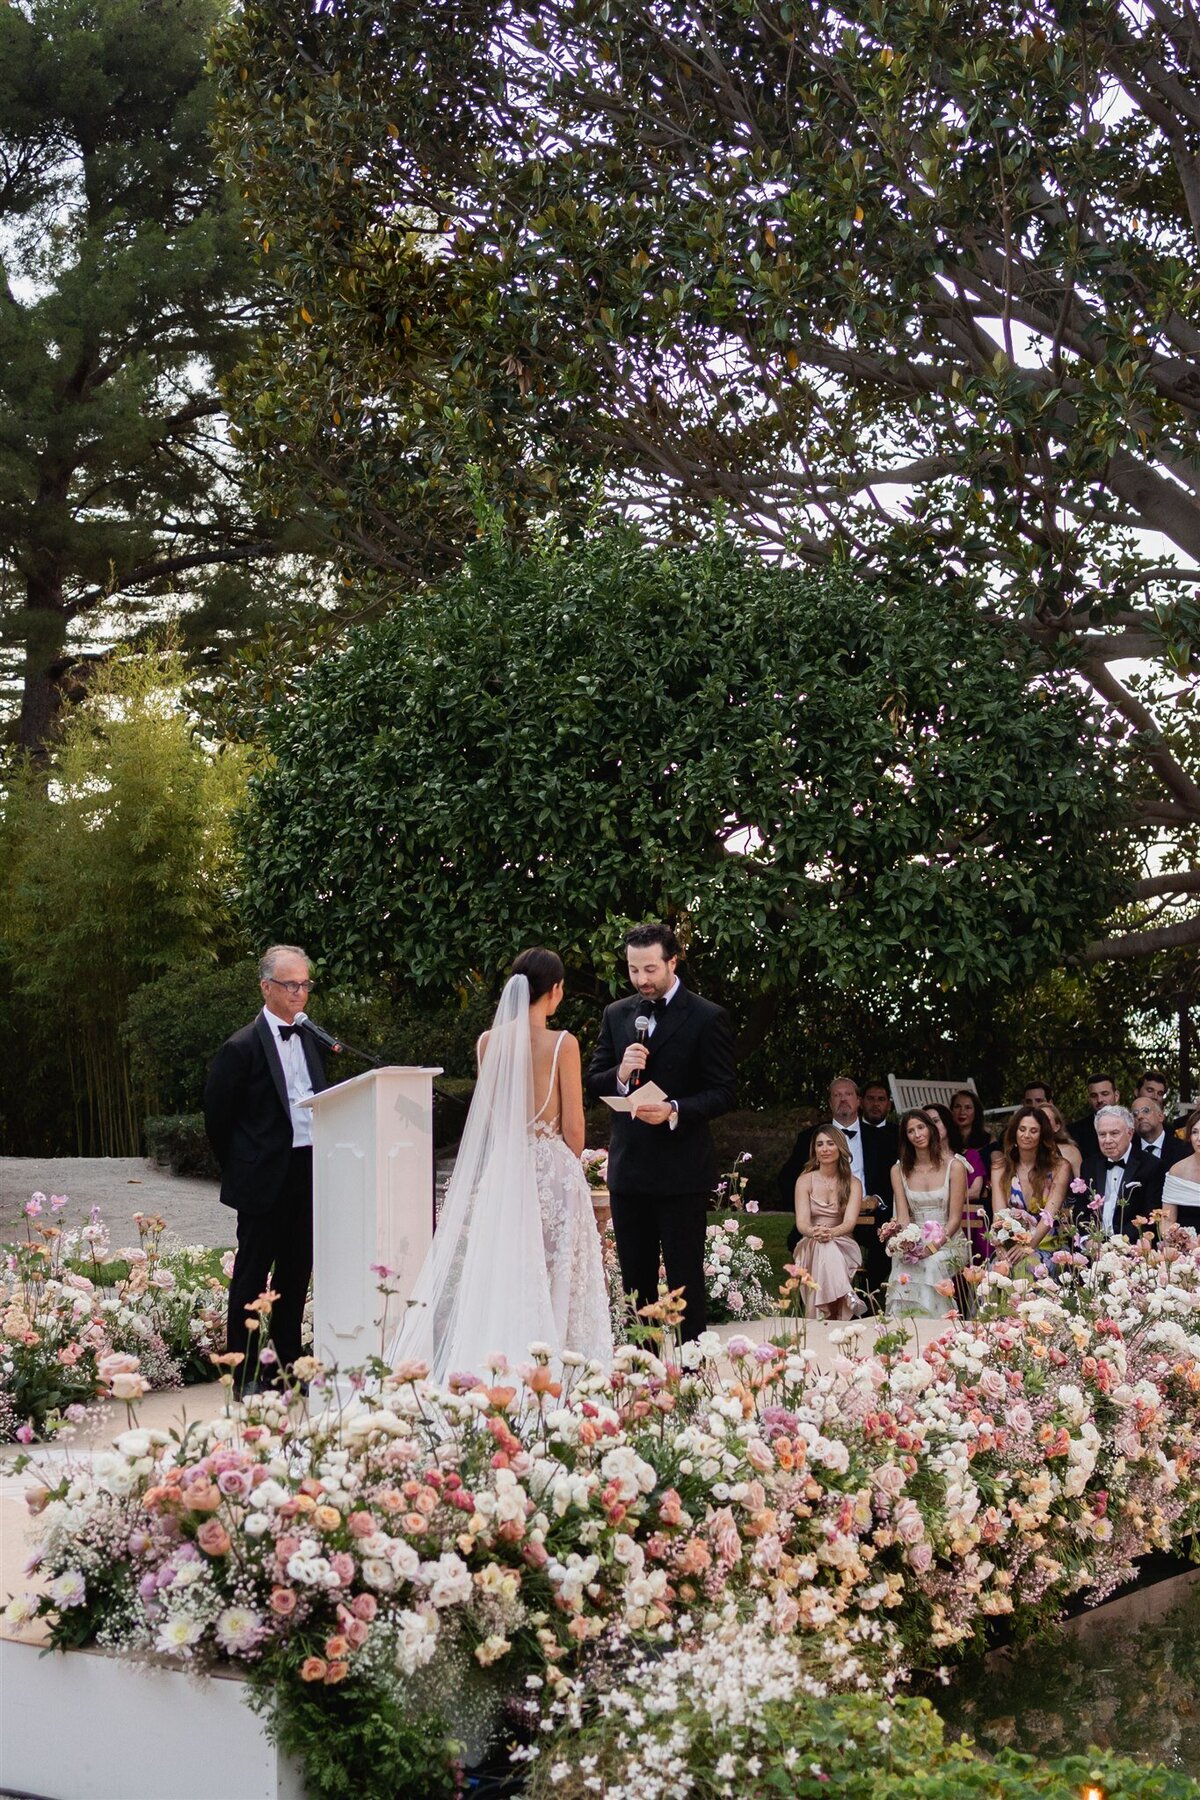 Elegant and floral oudoor wedding ceremony